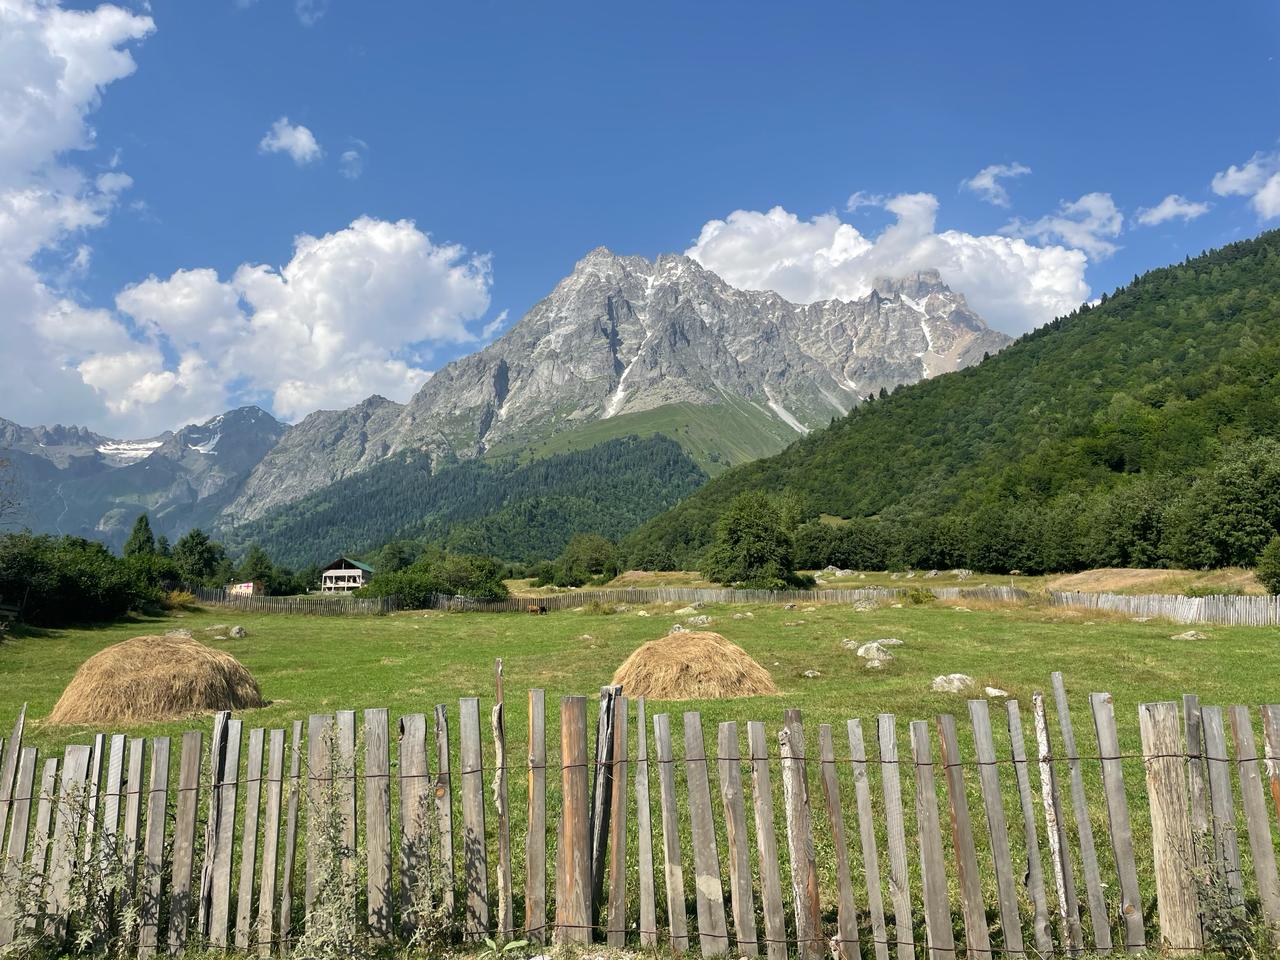 Svaneti Georgia - Hiking and trekking in the Caucasus mountains.